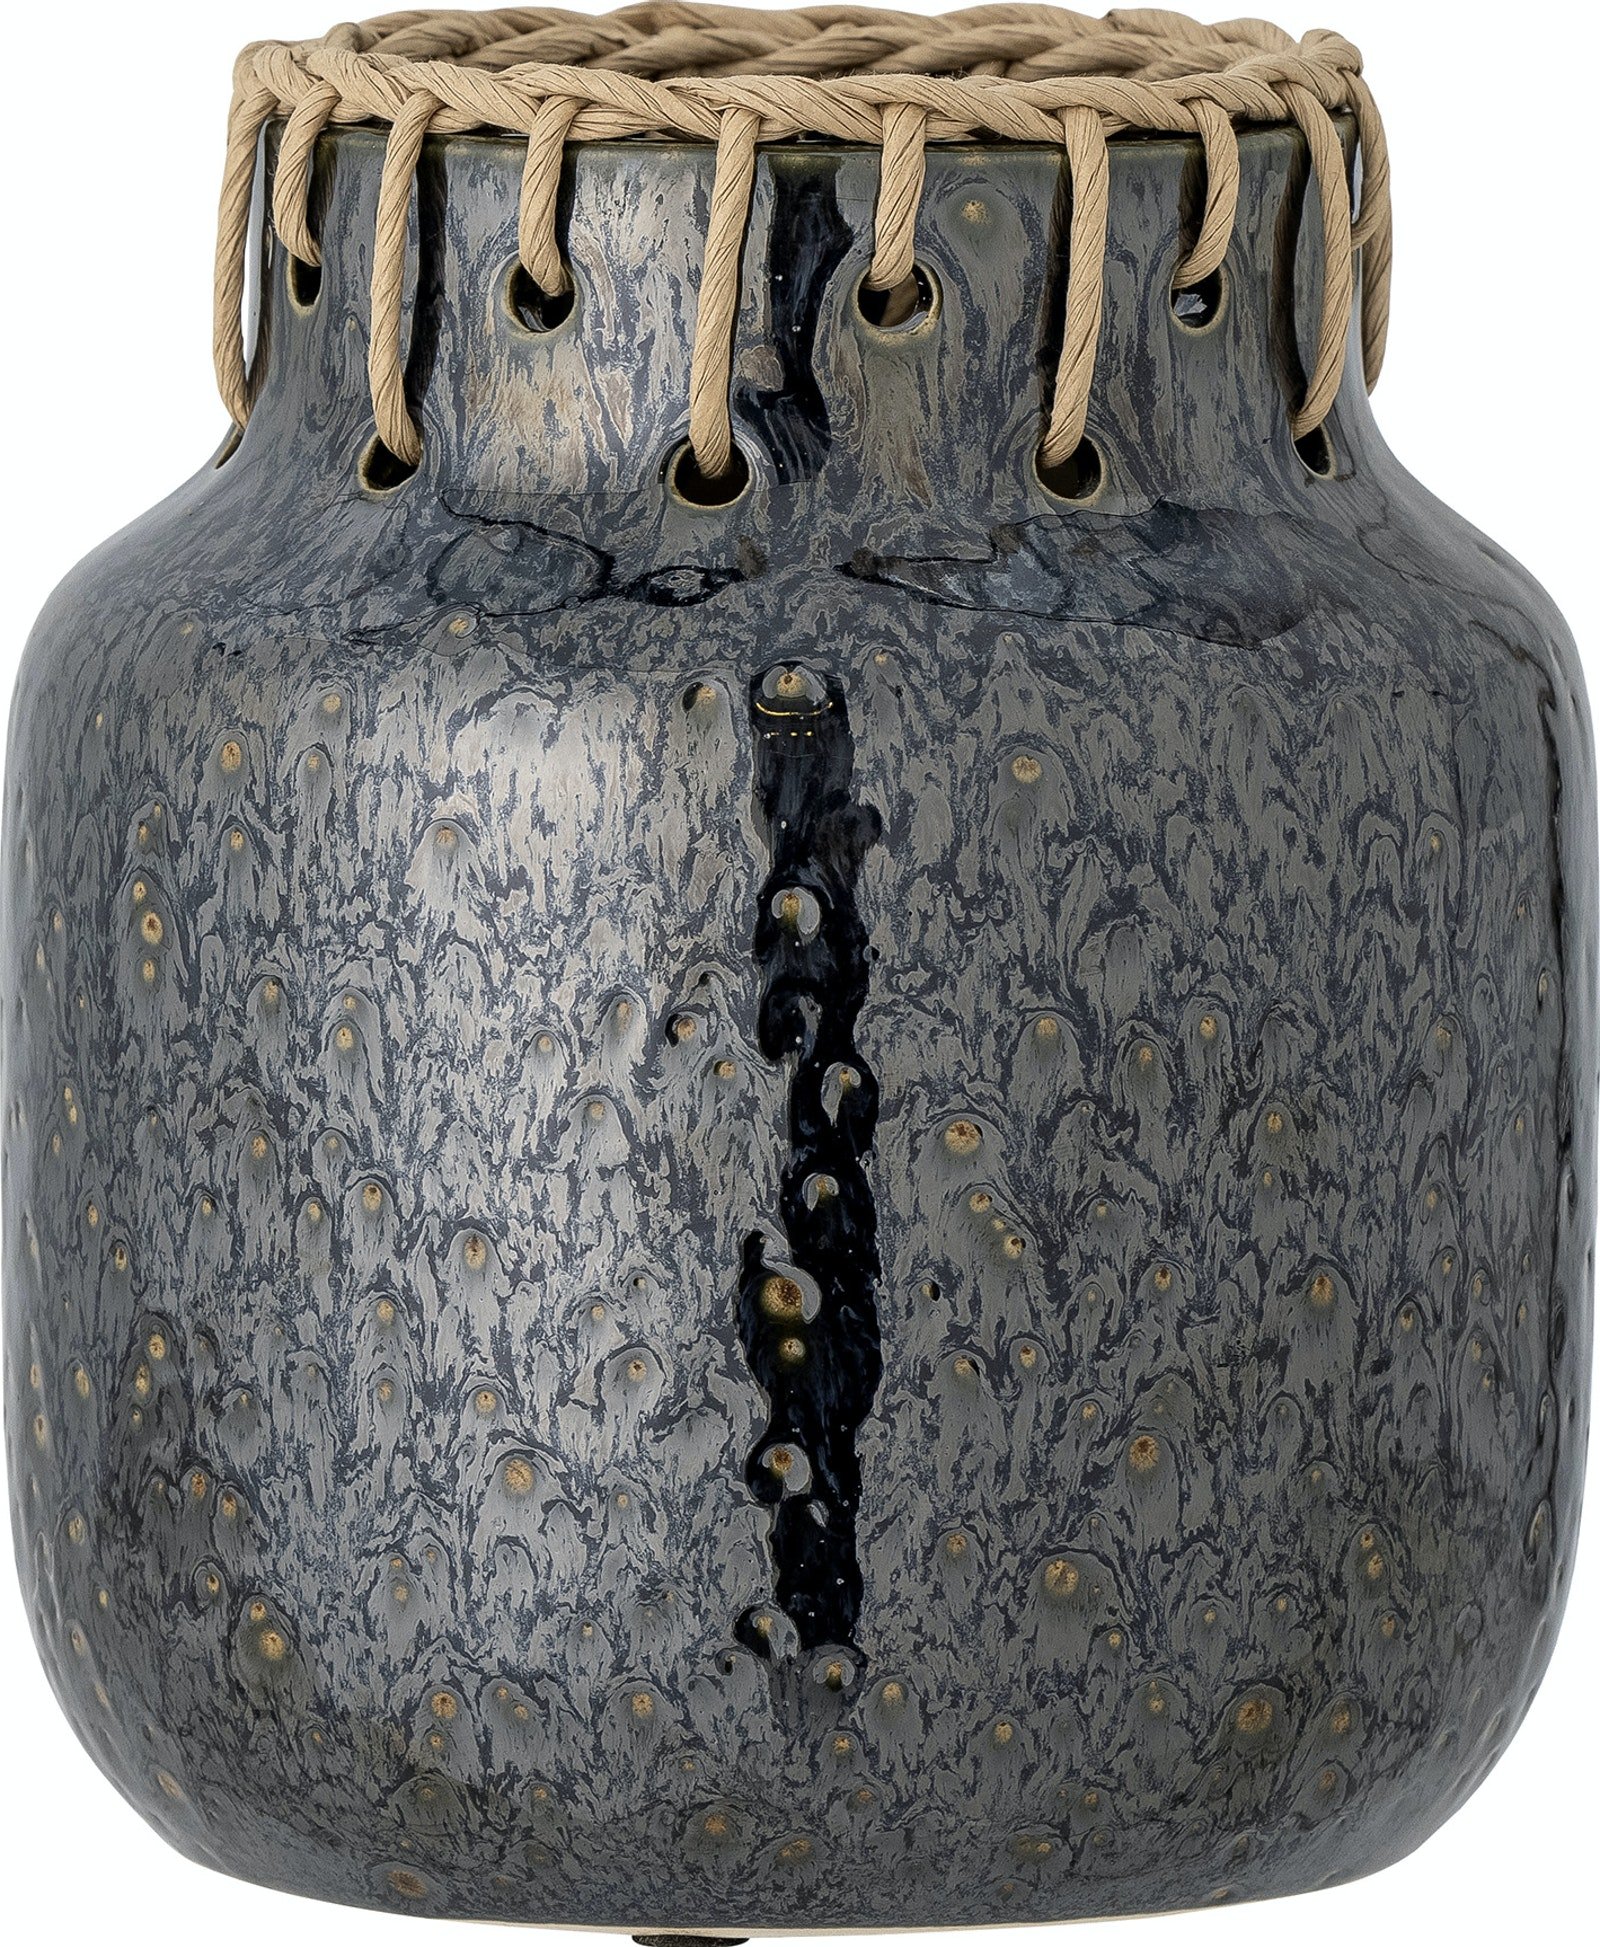 14: Janel, Vase, Keramik by Bloomingville (D: 17 cm. x H: 21 cm., Sort)